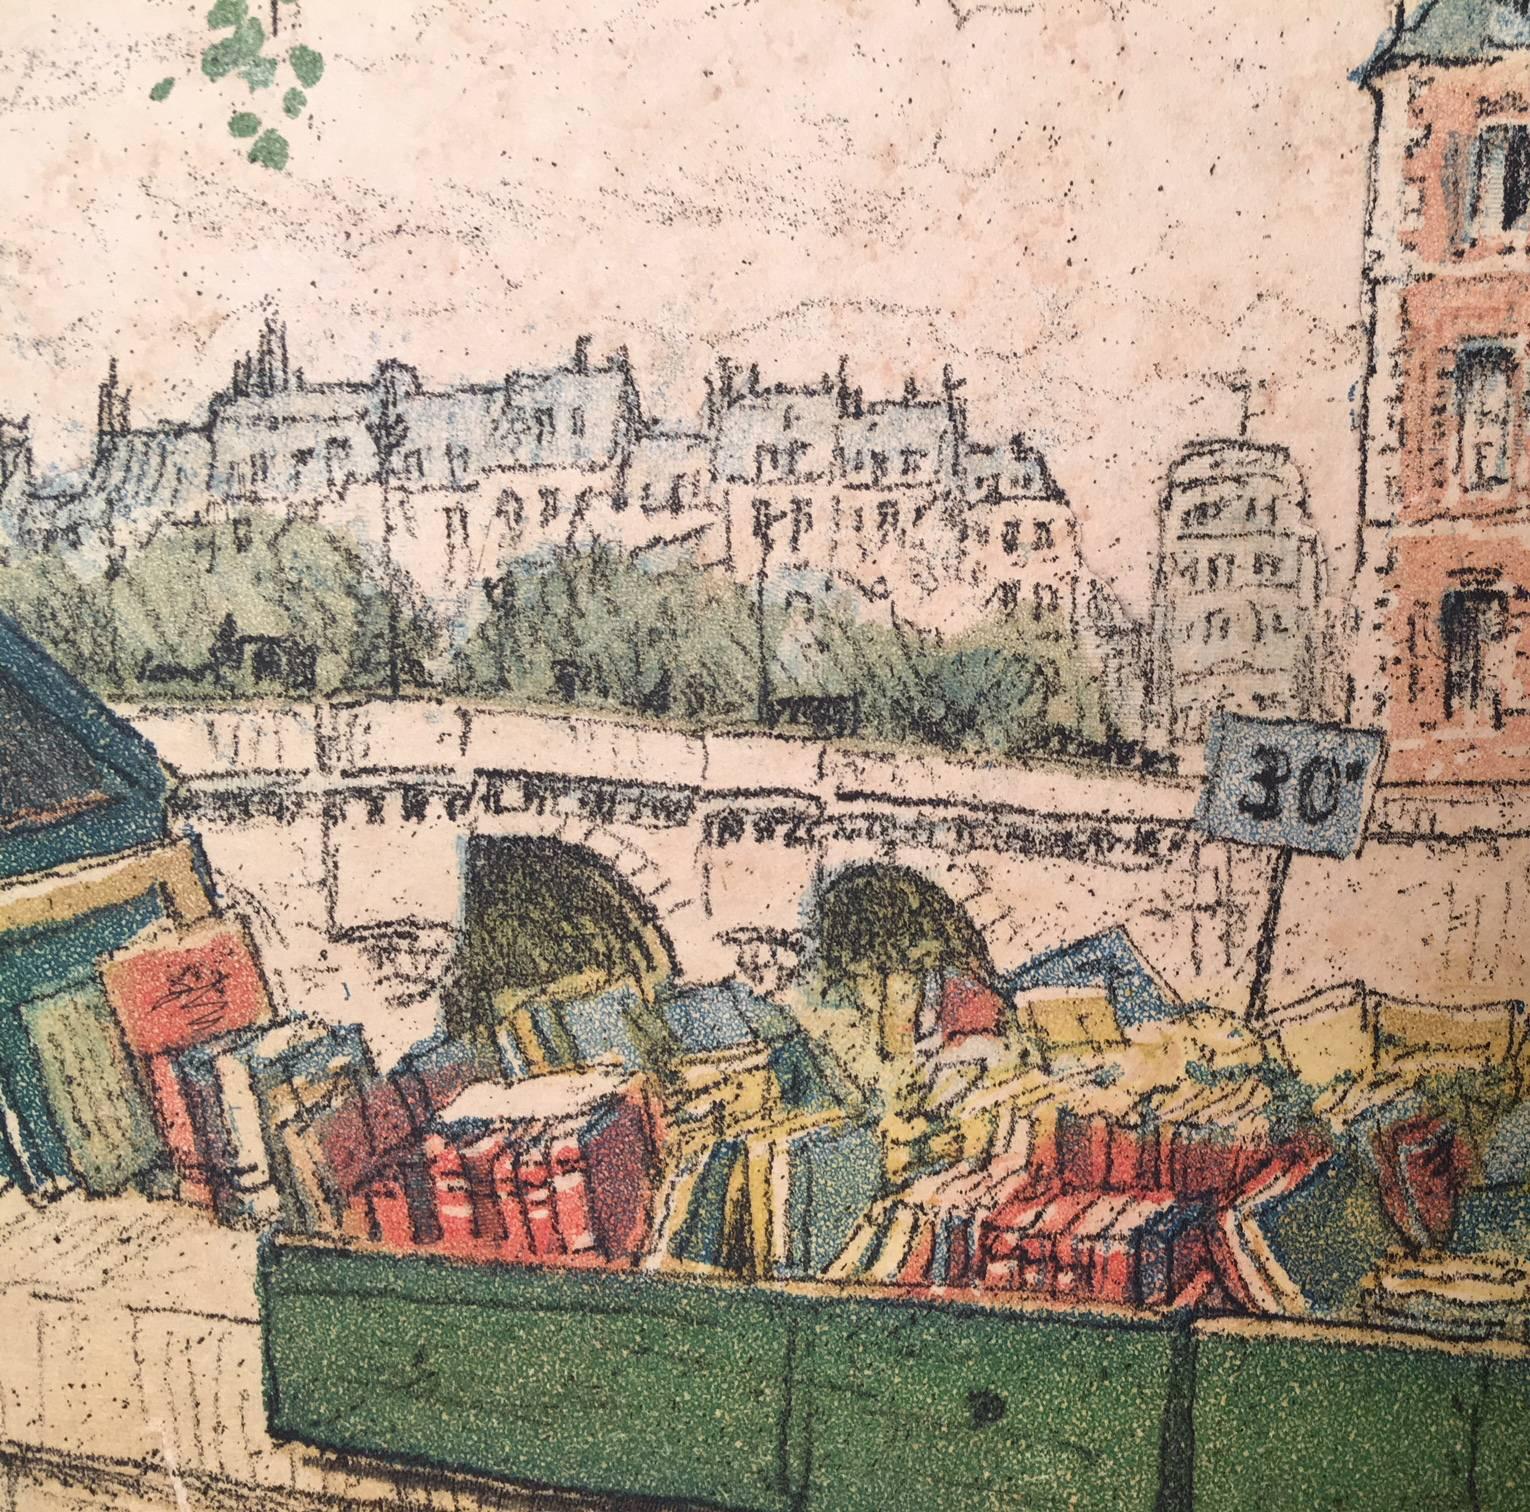 Book Sellers on Seine, Paris - Impressionist Print by T. F. Šimon